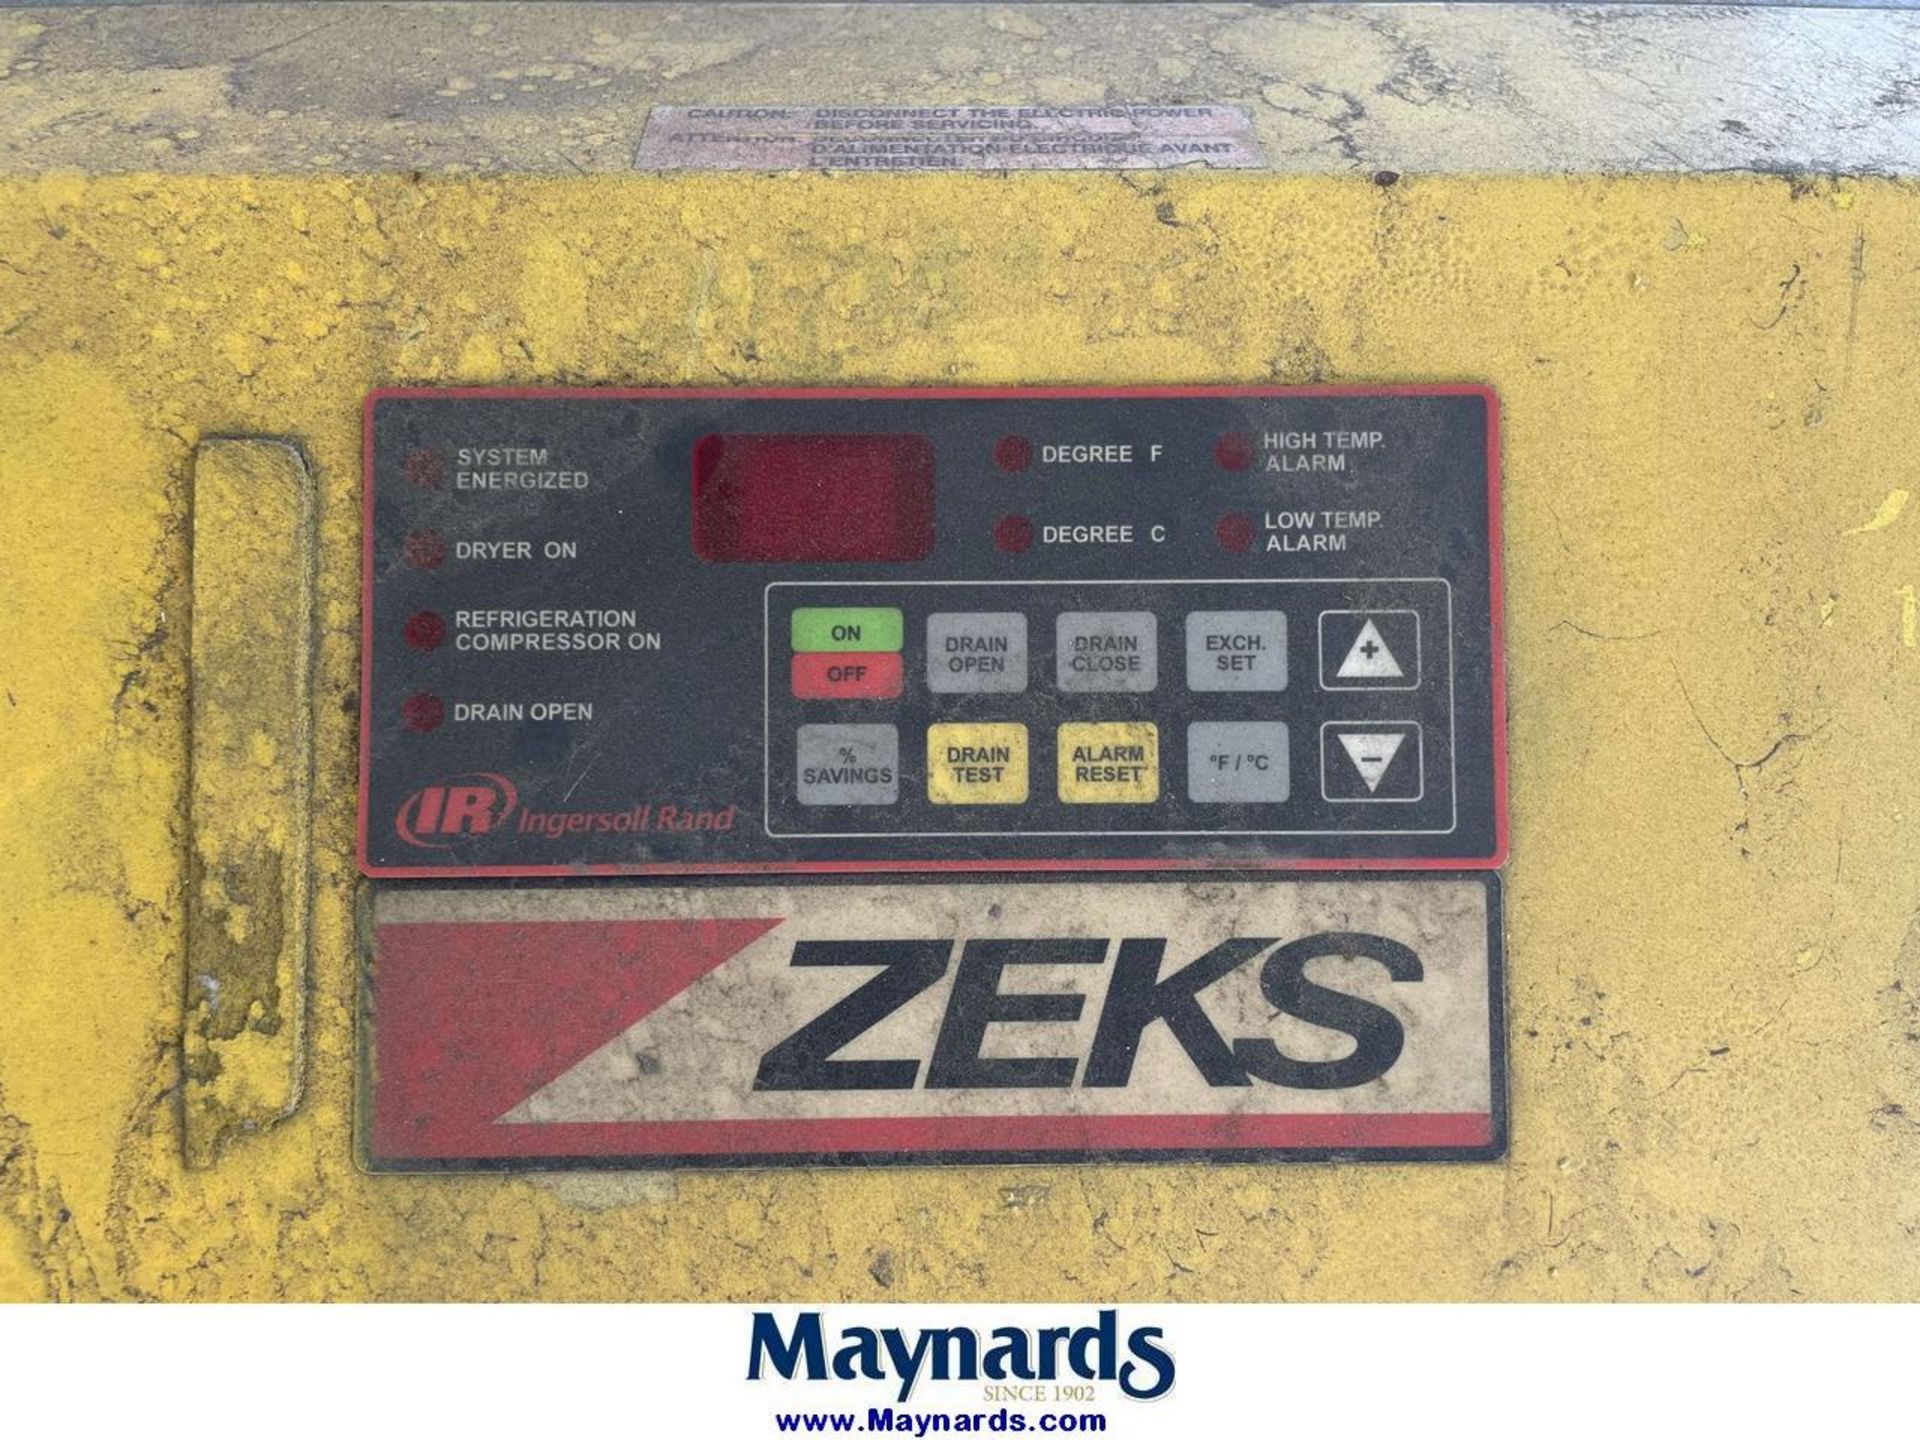 Zeks HeatSink Refrigerated Air Dryer (Display Board Does Not Work) - Image 4 of 5